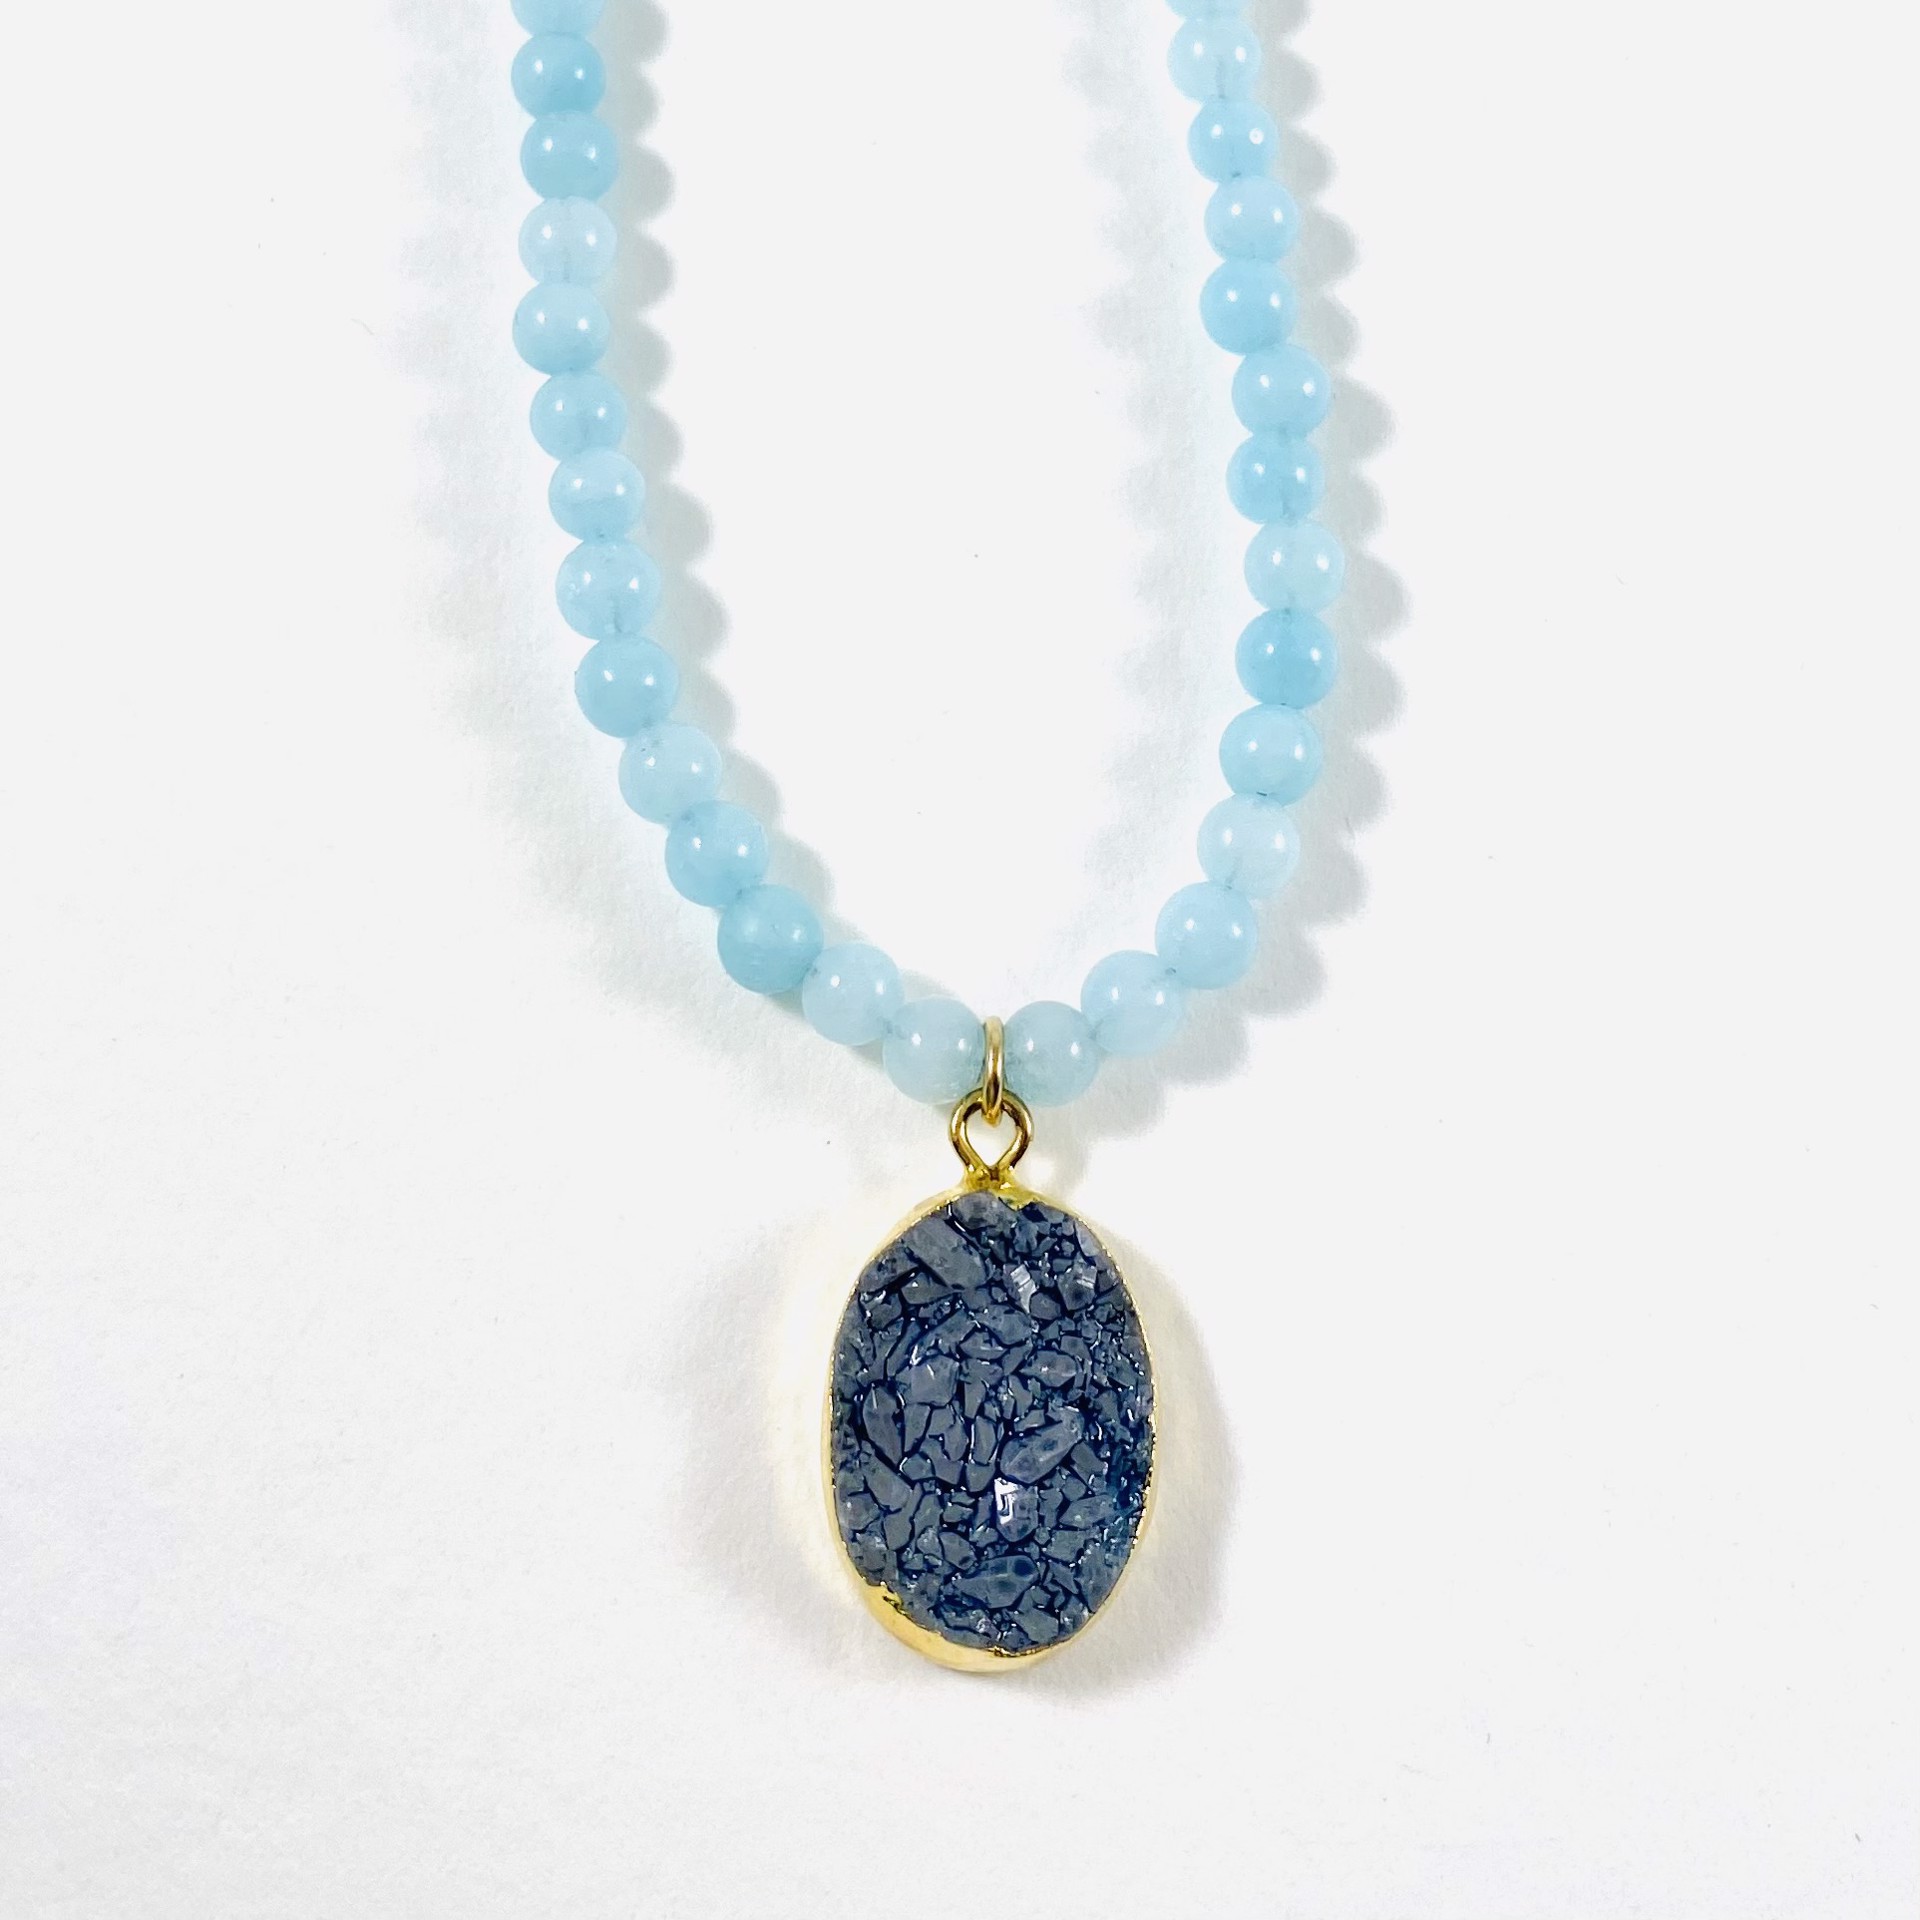 Aqua Jade Bead Necklace, Druzy Pendant ND1 by Nance Trueworthy